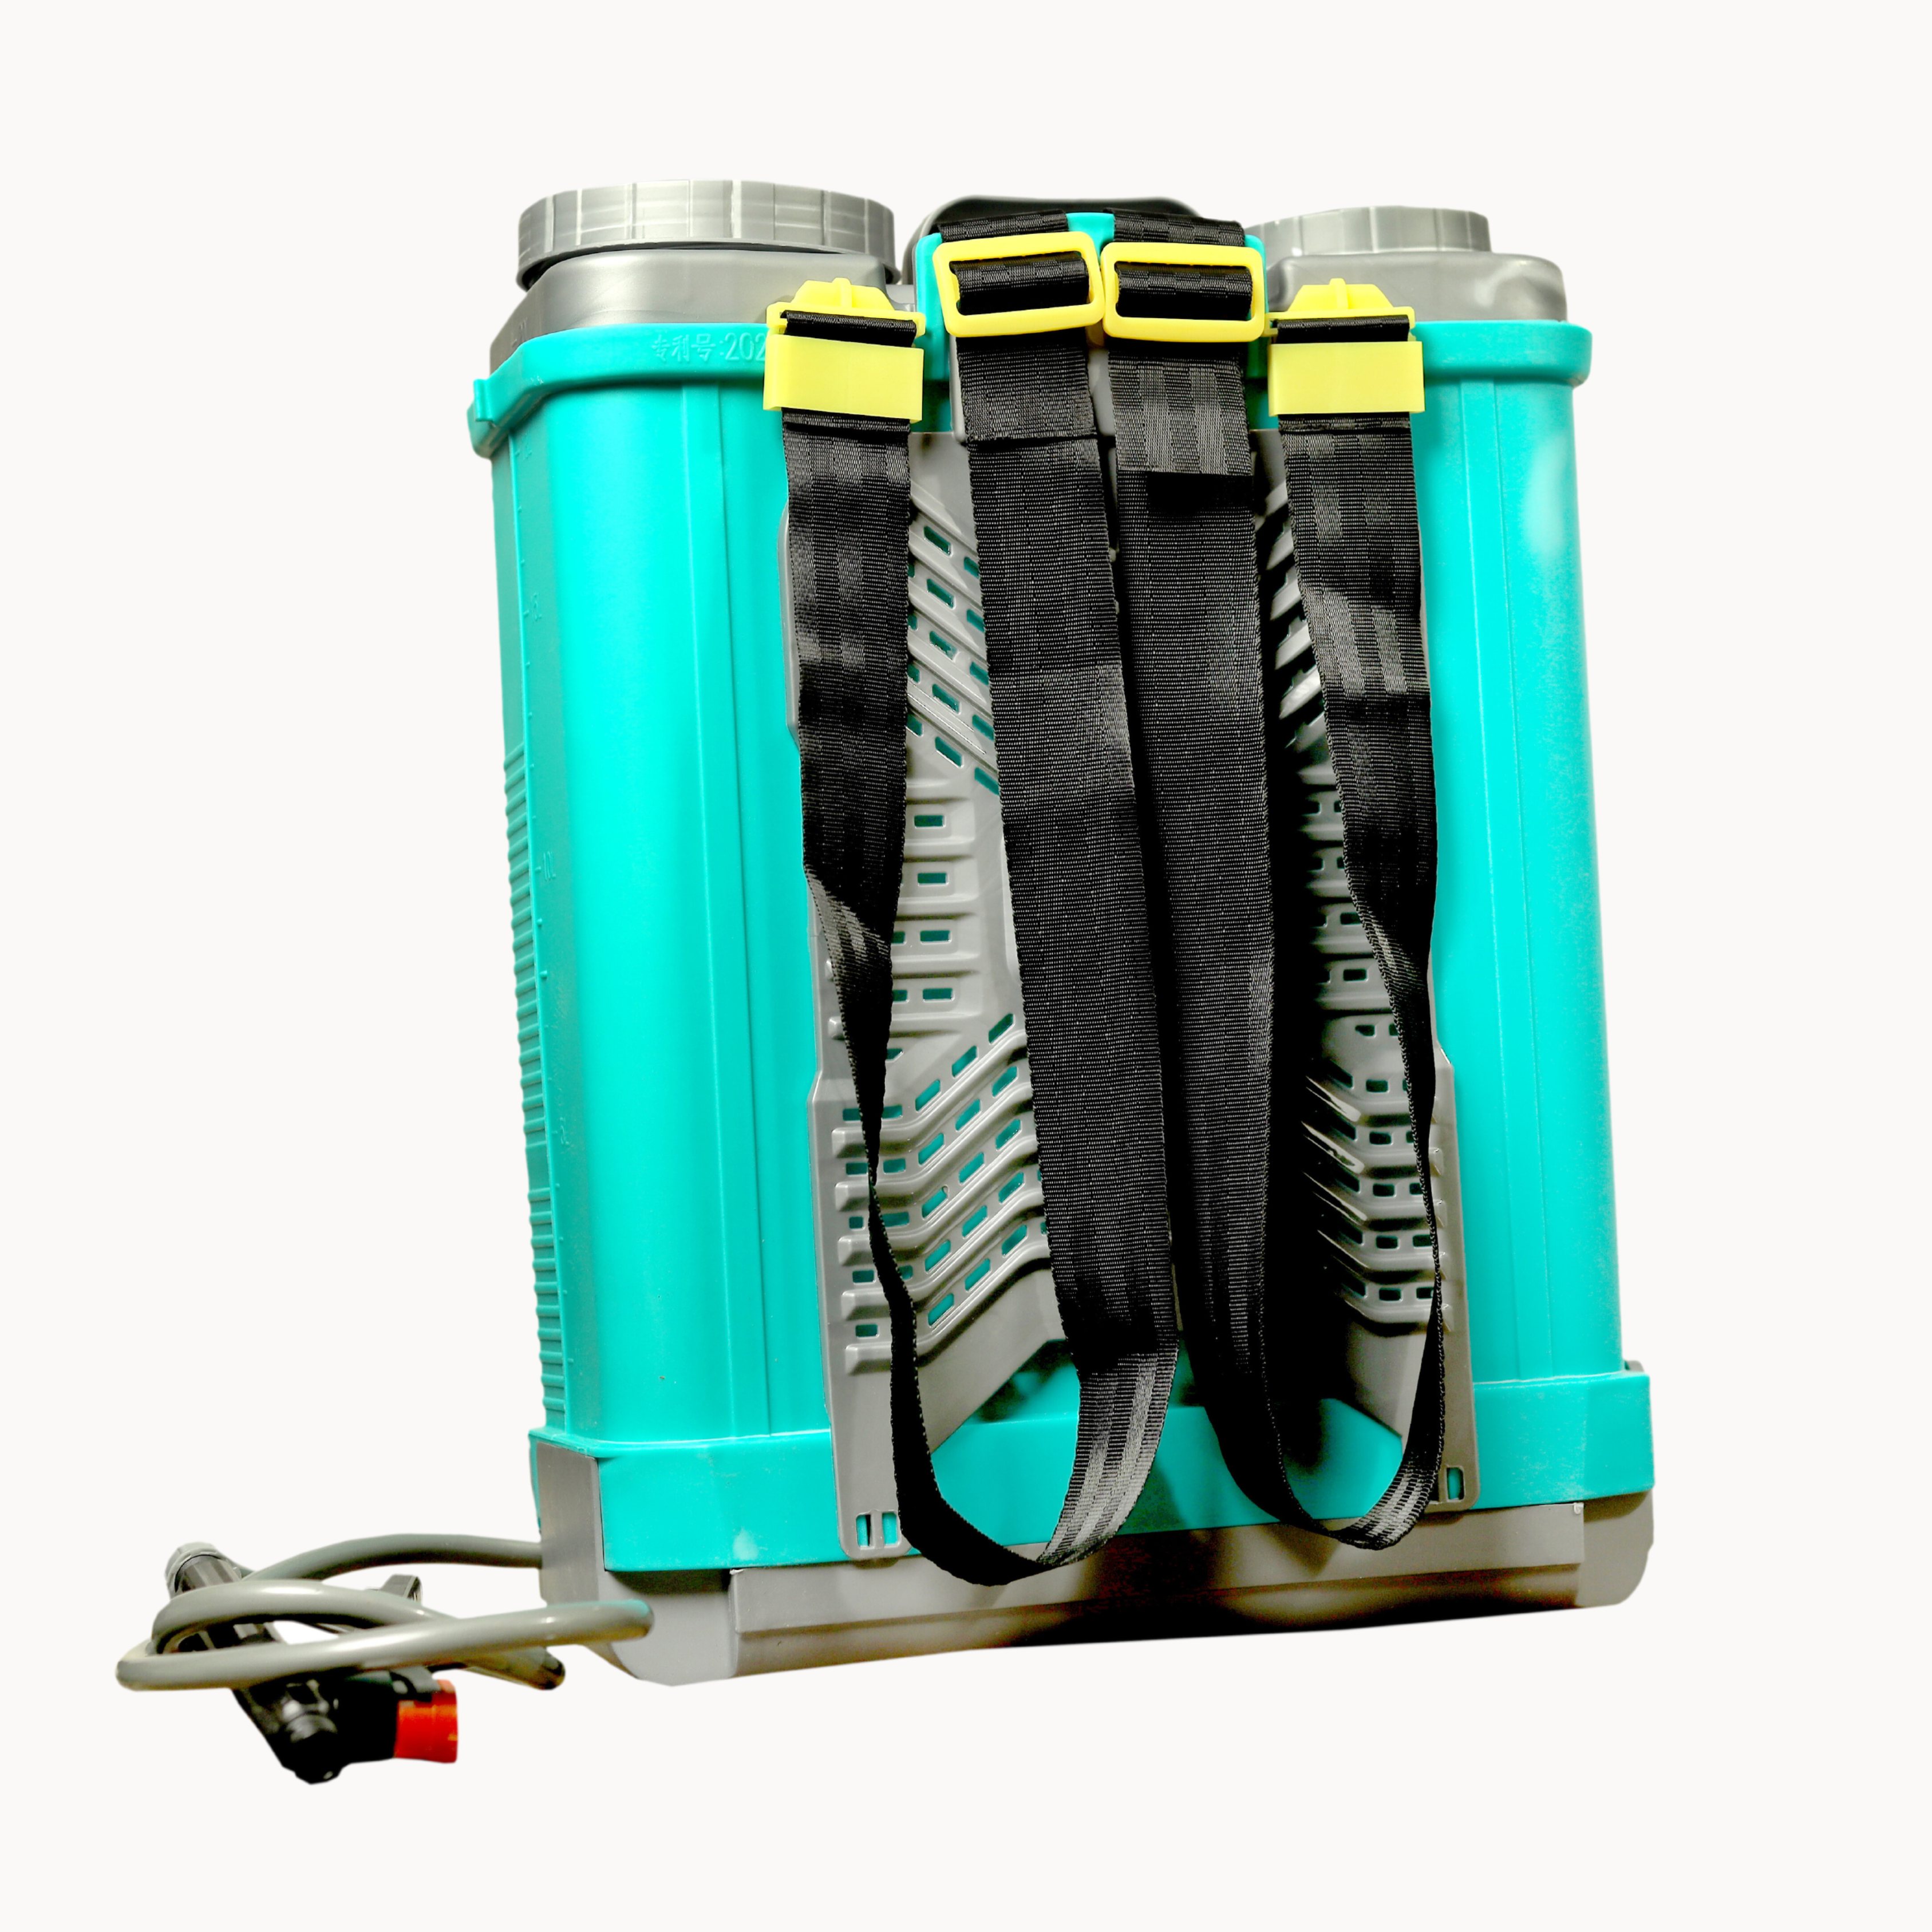 SUPERB KISHAN Simplify Farming Knapsack/Backpack Battery Operated With Mixer  20 Liter Garden Sprayer Sk-927